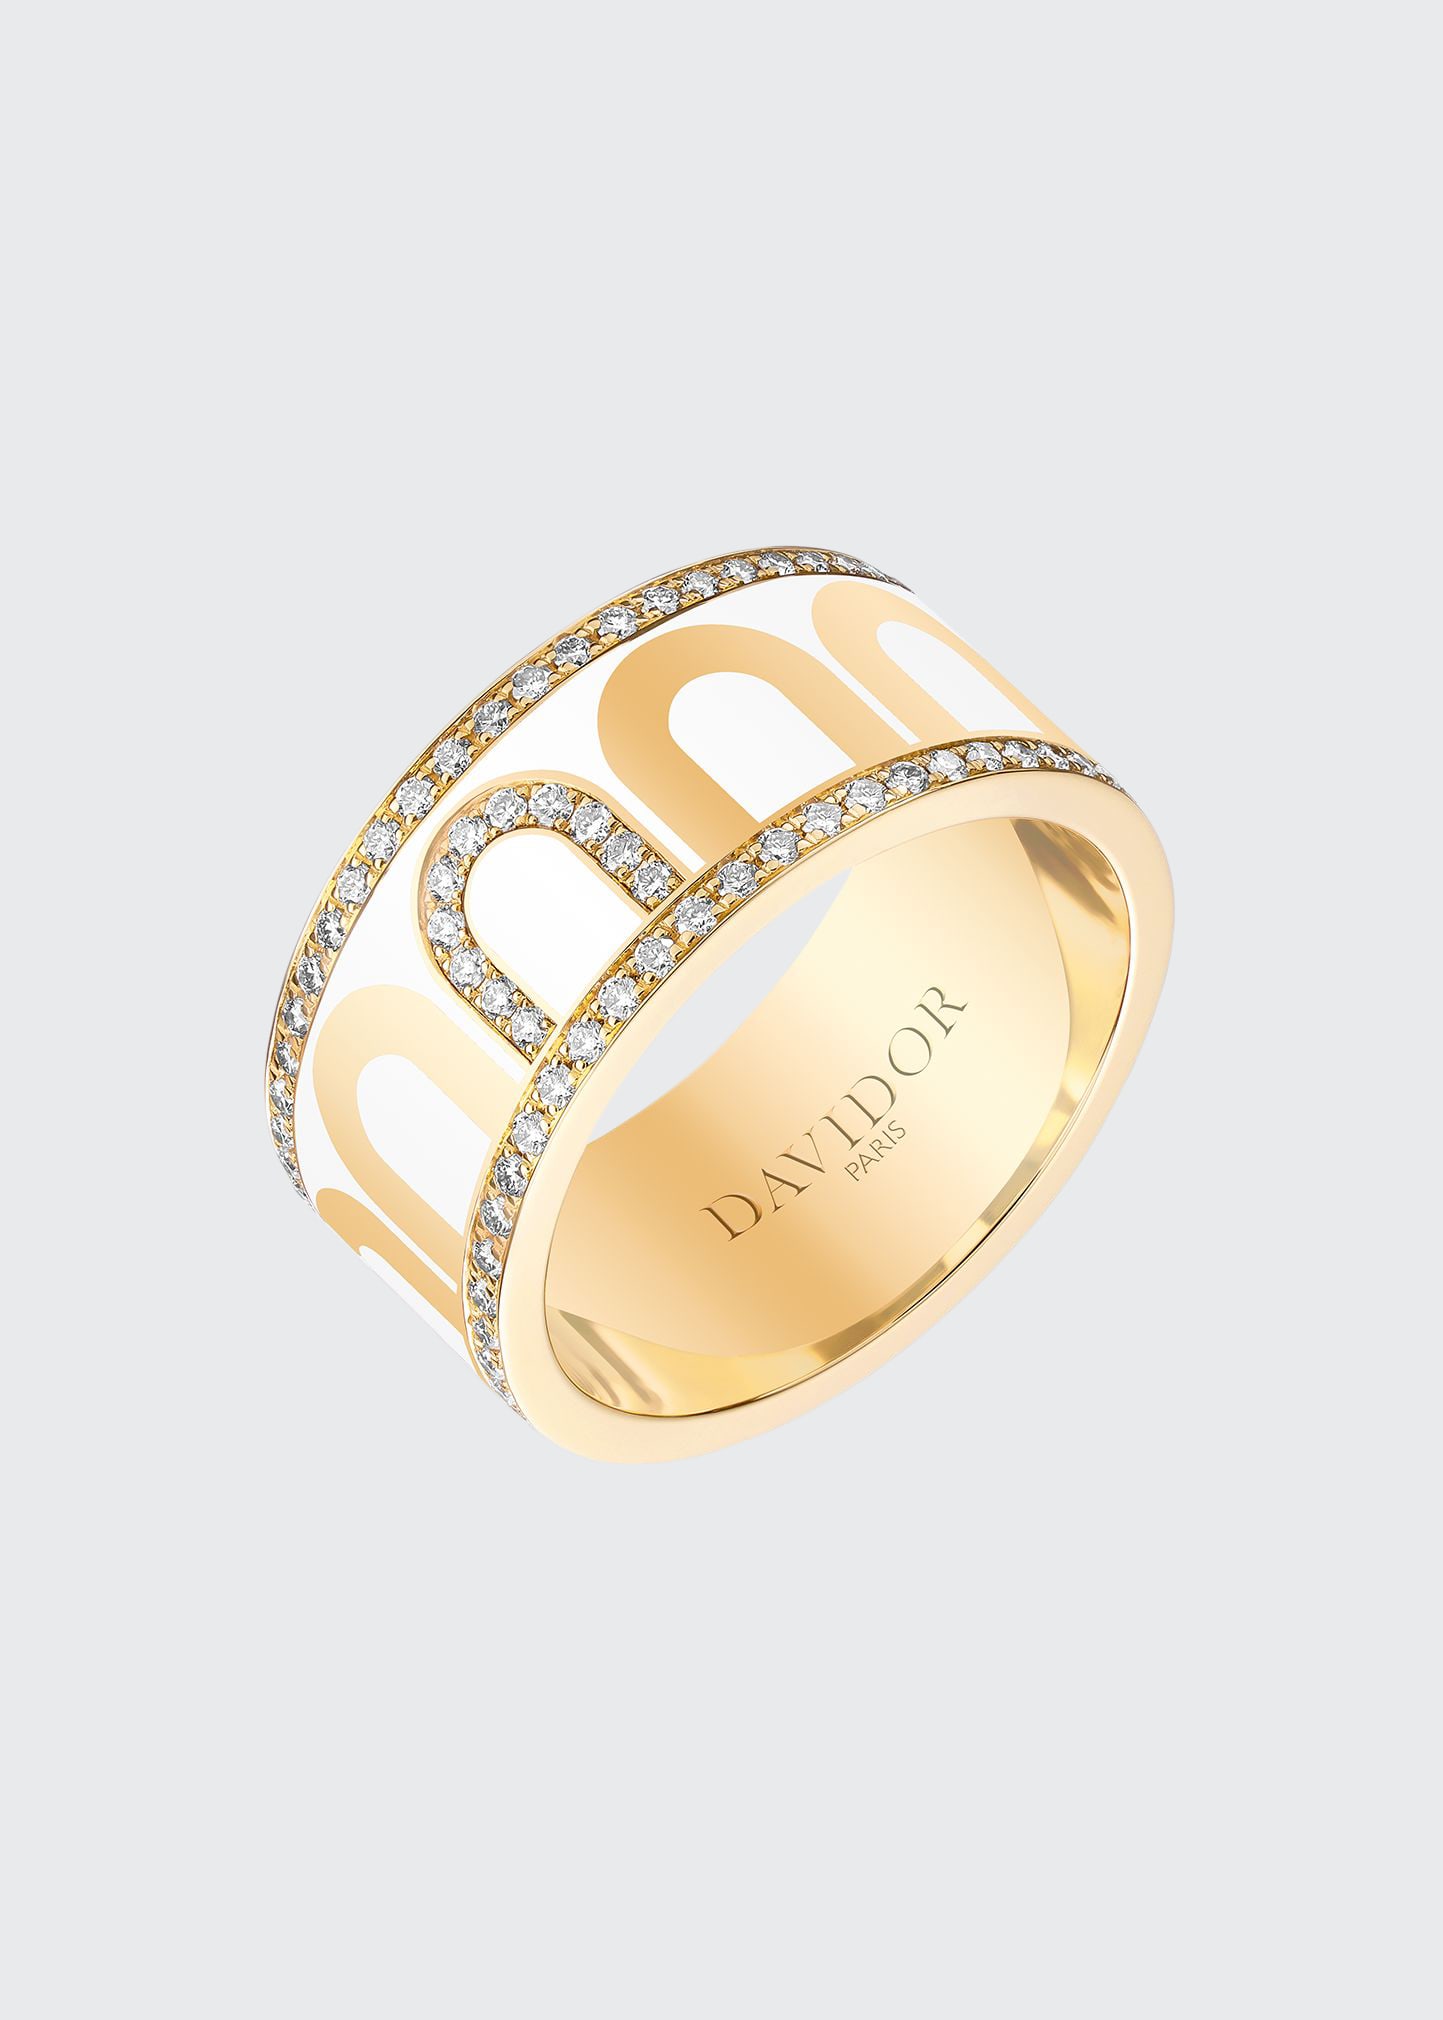 DAVIDOR L'Arc de Davidor 18k Gold Porta Diamond Ring - Grand Model, Neige, Size 57